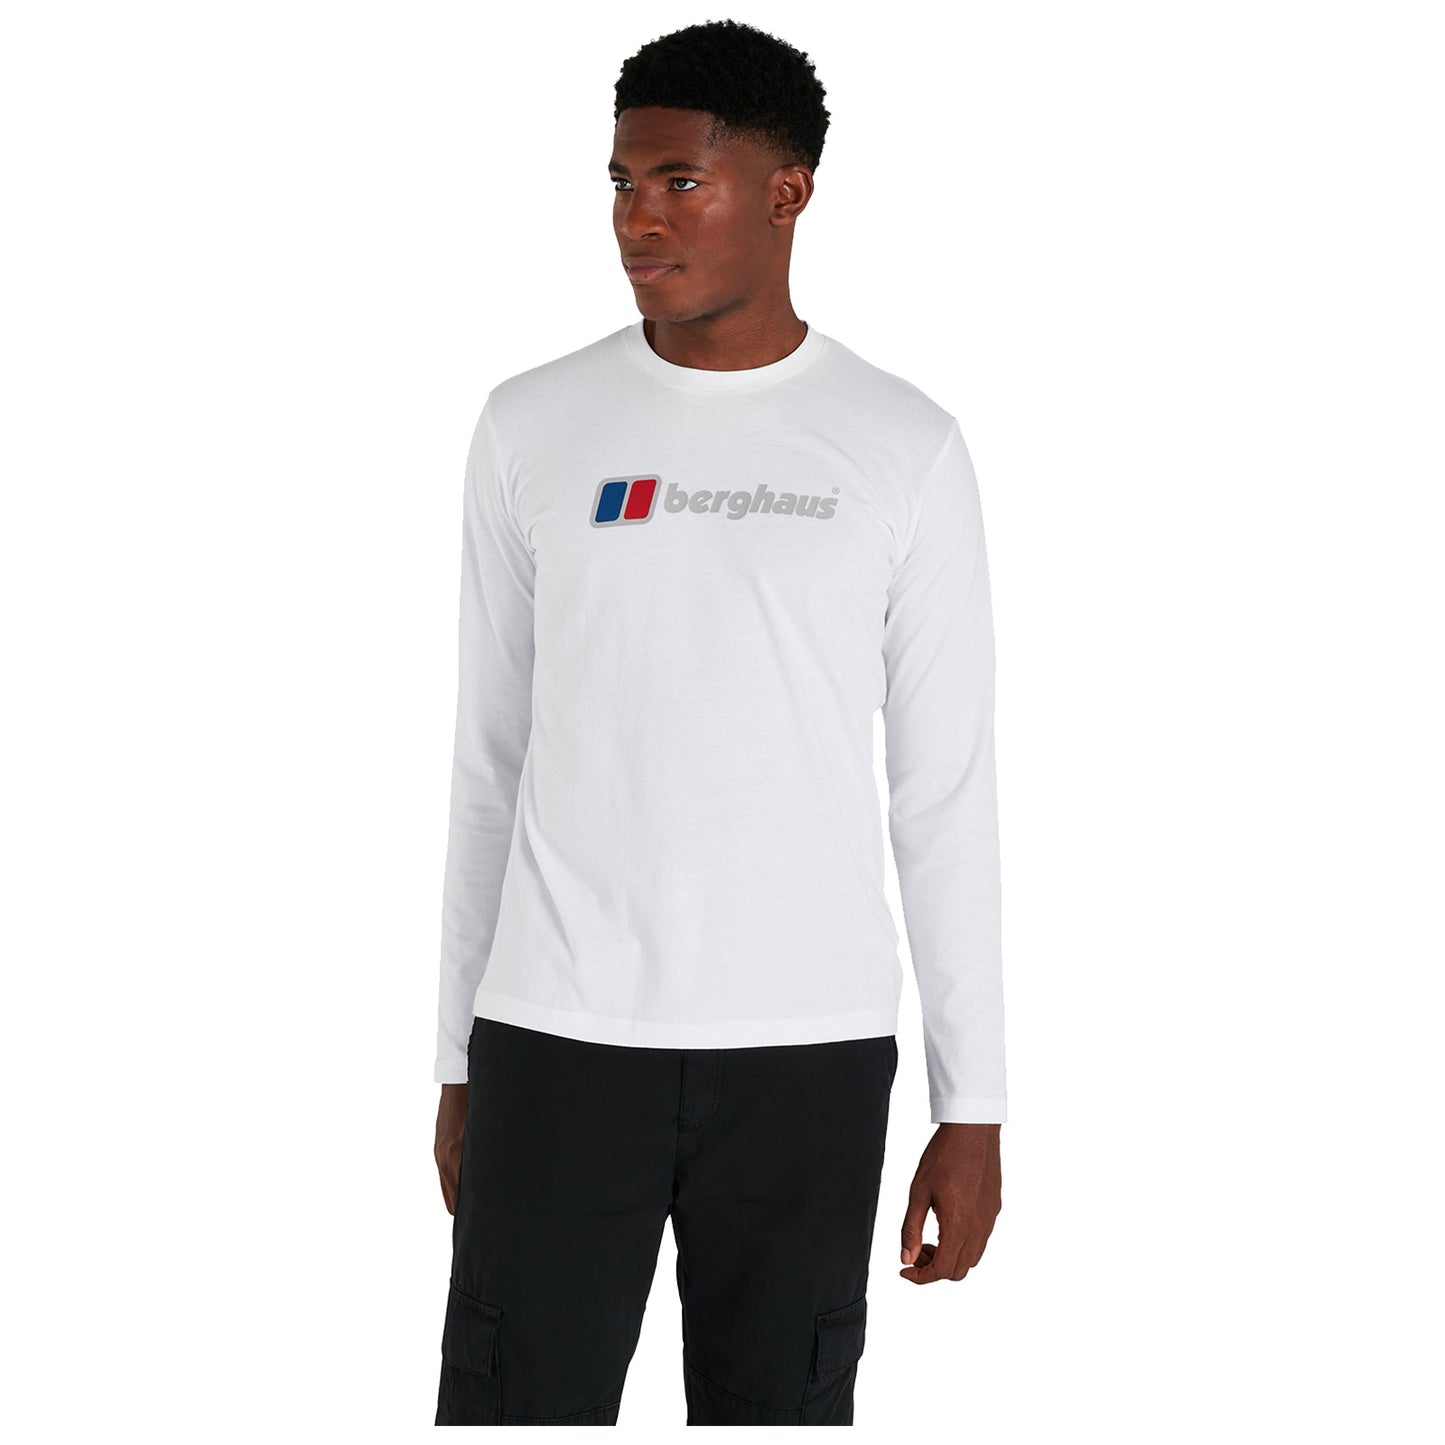 Berghaus Mens Organic Big Logo Long Sleeve T-Shirt